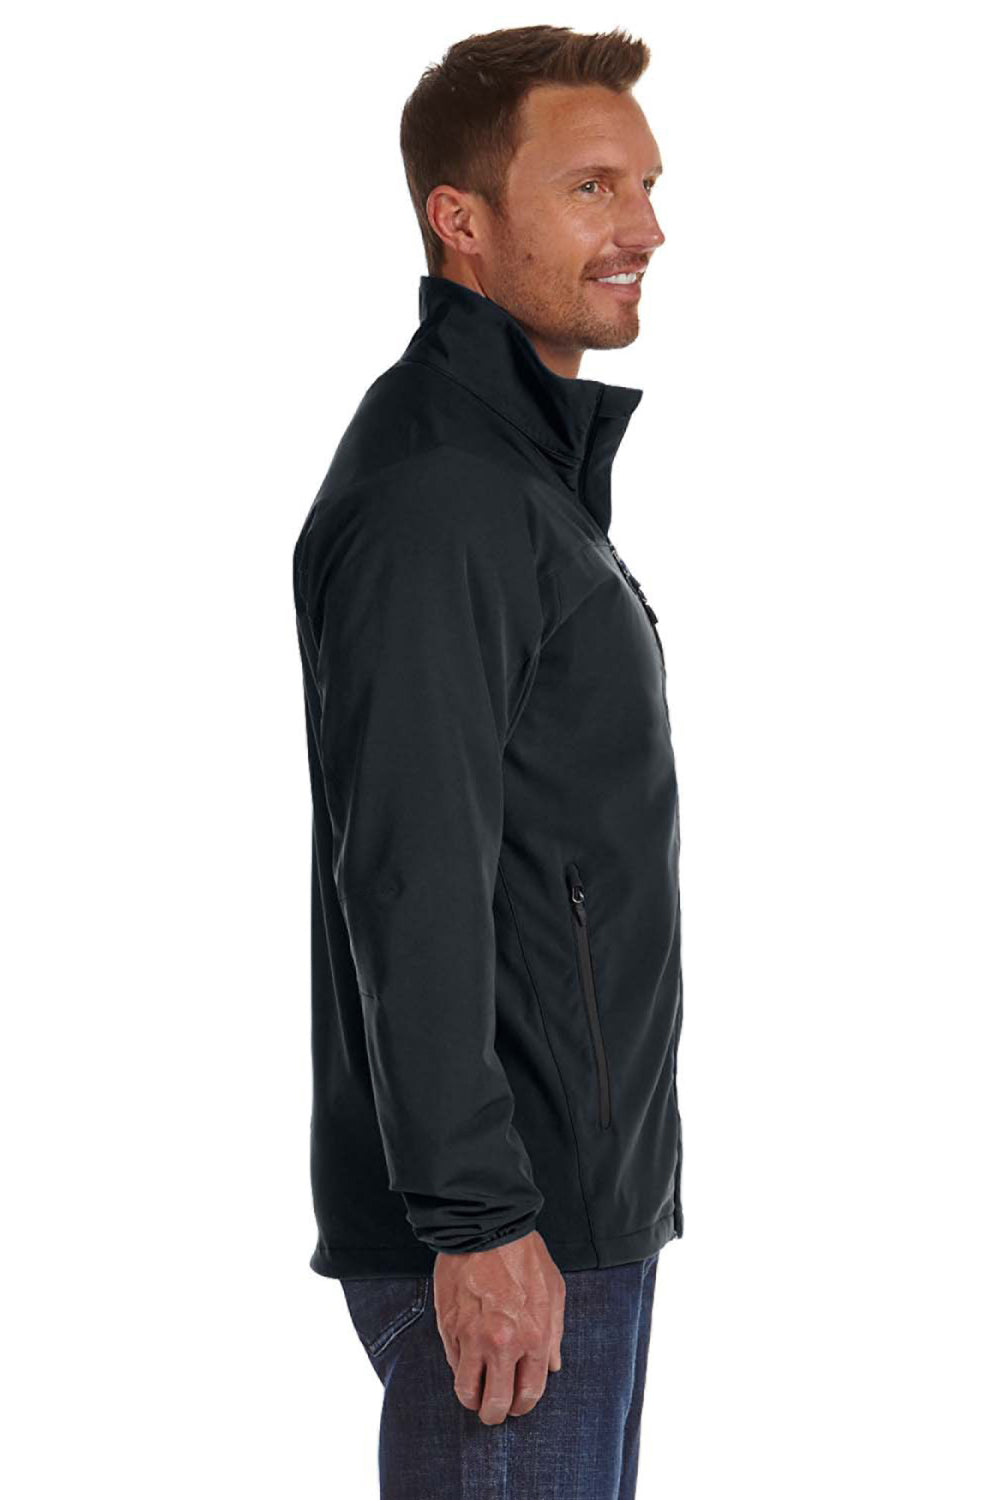 Marmot 98260 Mens Tempo Water Resistant Full Zip Jacket Black Side